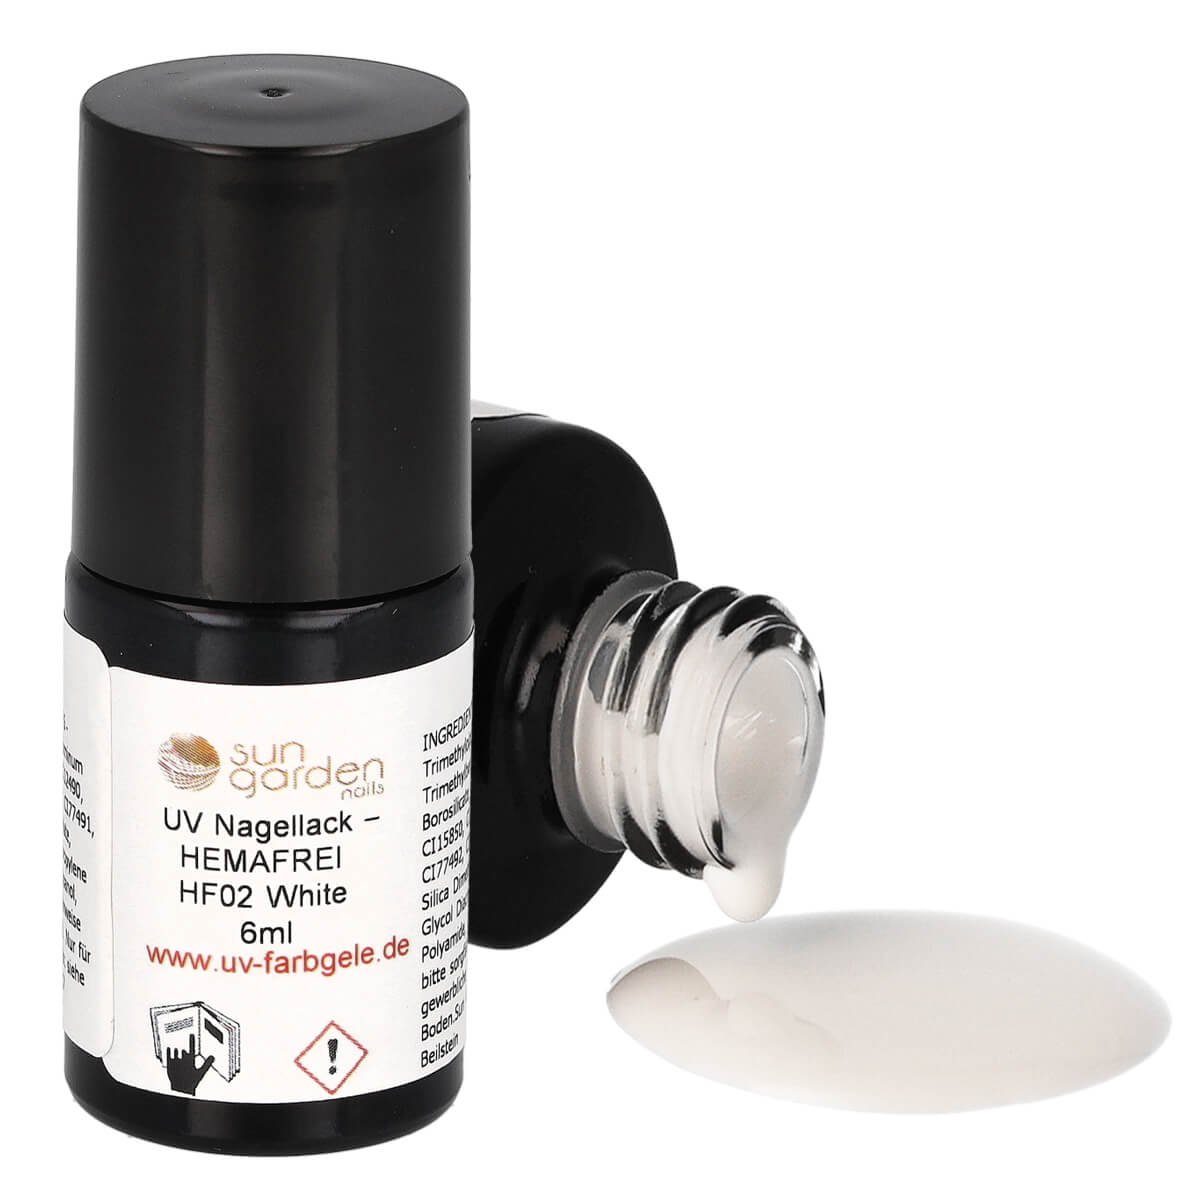 Sun Garden Nails Nagellack HF02 White - UV Nagellack 6ml – HEMAFREI | Nagellacke